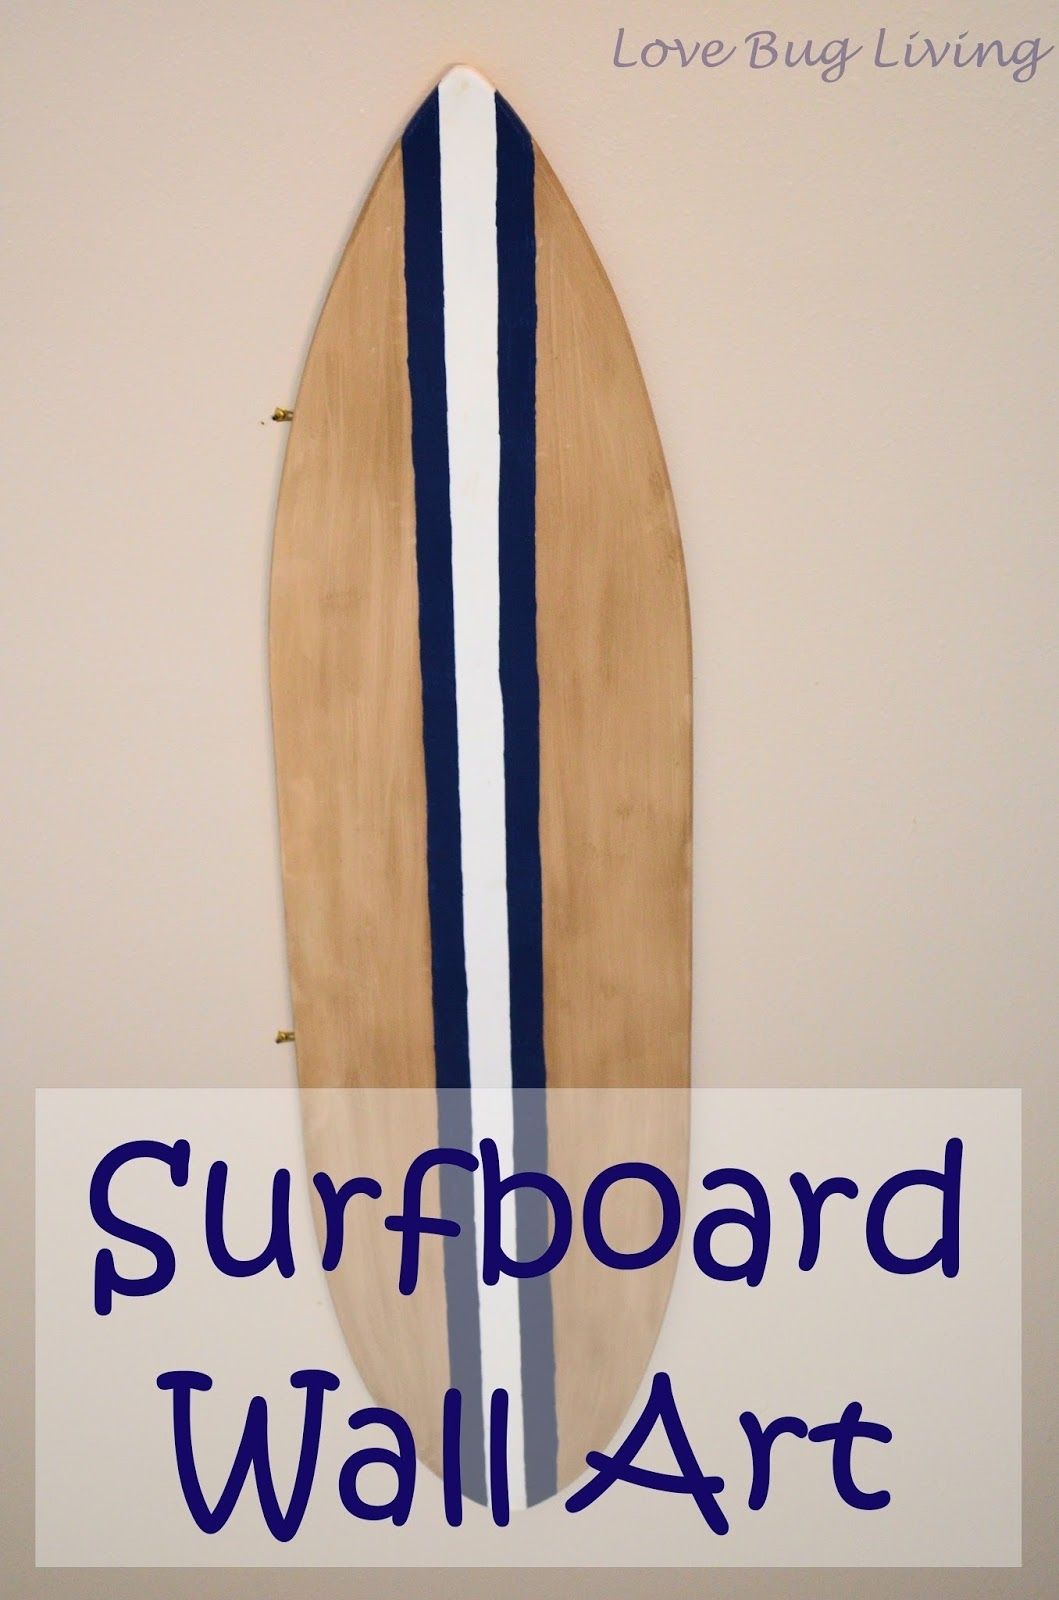 Love Bug Living: Surfboard Wall Art Throughout Surfboard Wall Art (View 12 of 20)